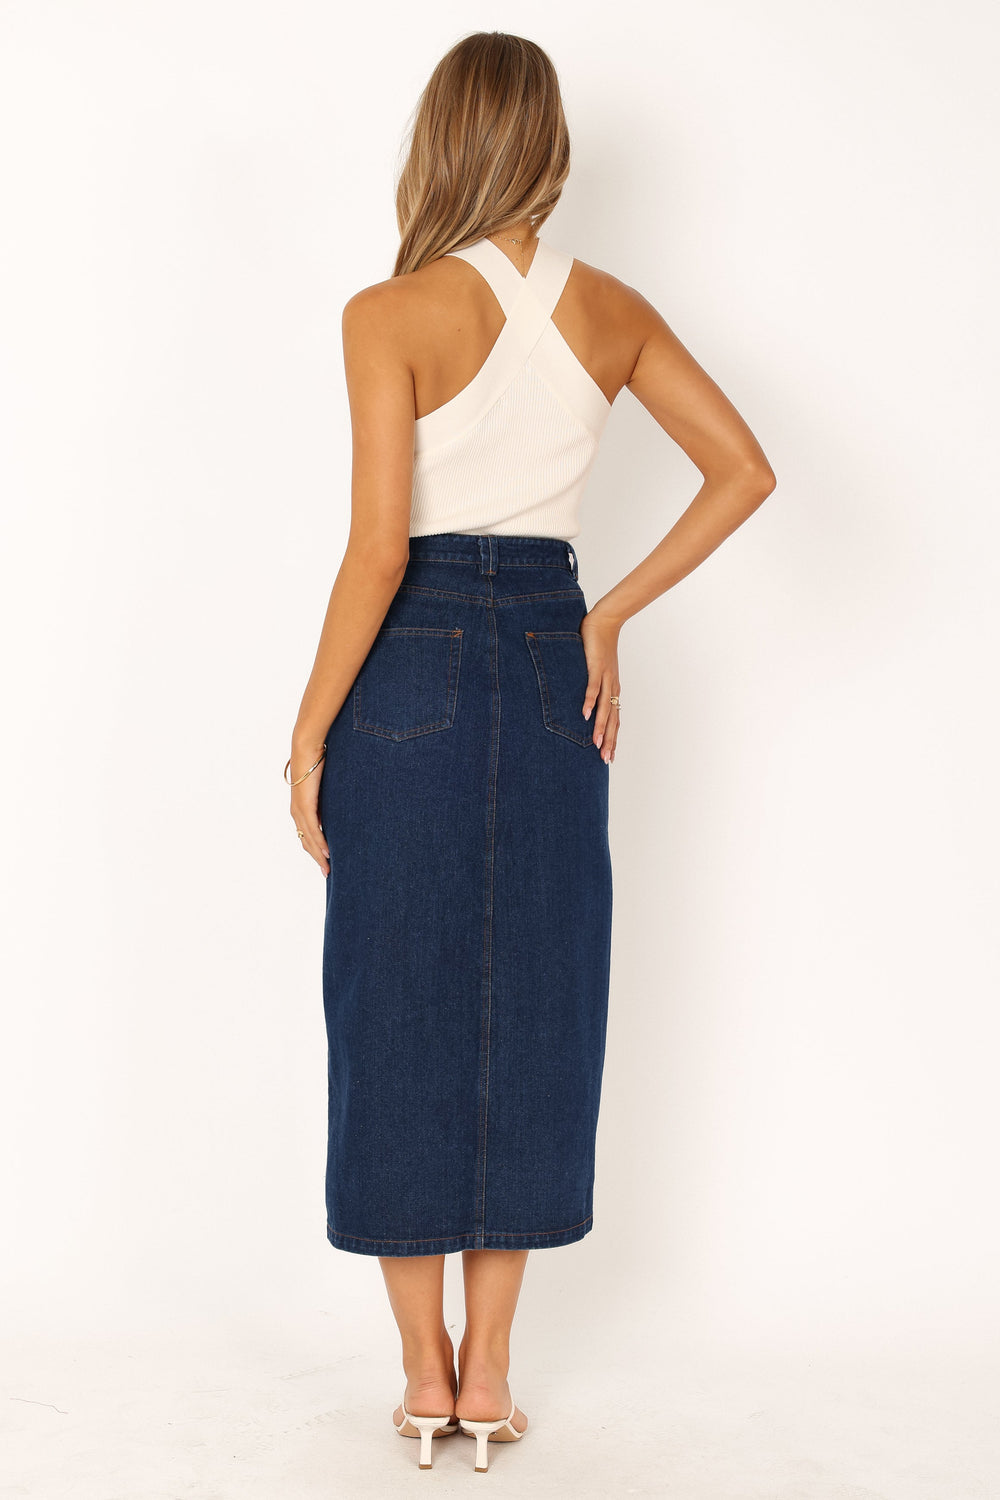 VINTAGE JEAN Skirt/midi Length Jean Skirt/recycled Jeans Skirt/dark Denim  /paint Stained Denim/vintage Denim/fab208nyc/fab208/boho Denim 